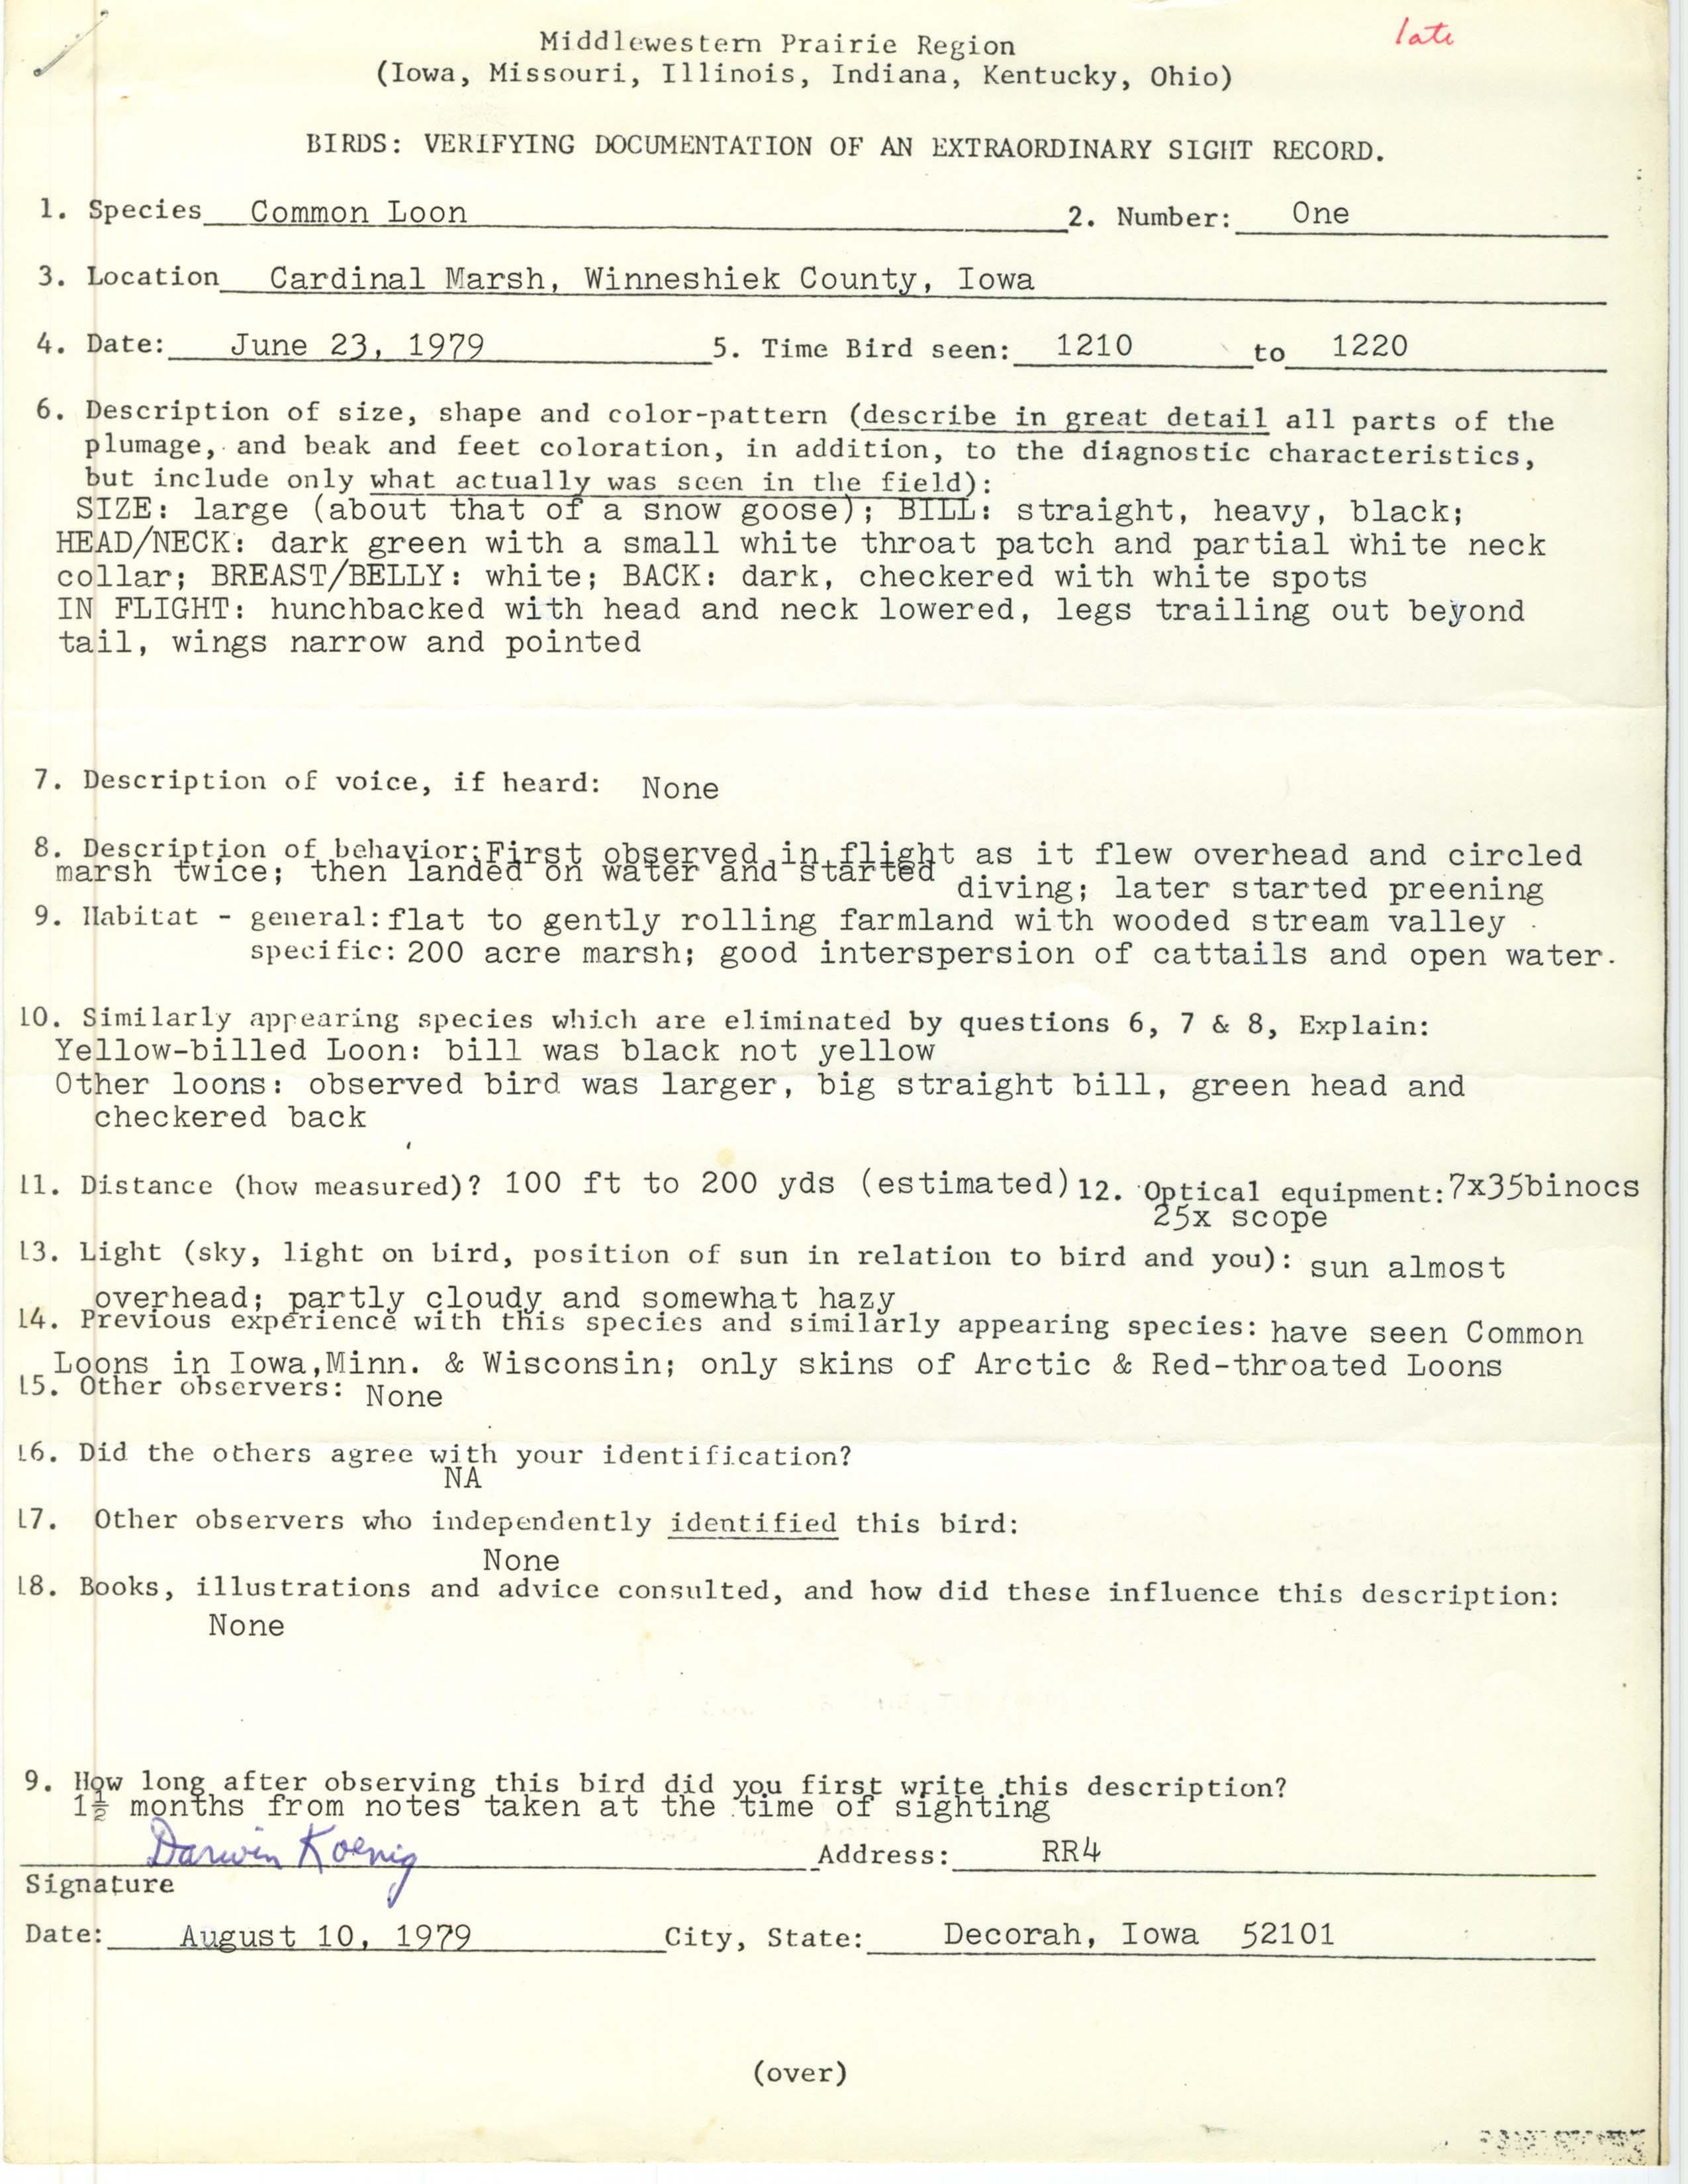 Rare bird documentation form for Common Loon at Cardinal Marsh, 1979